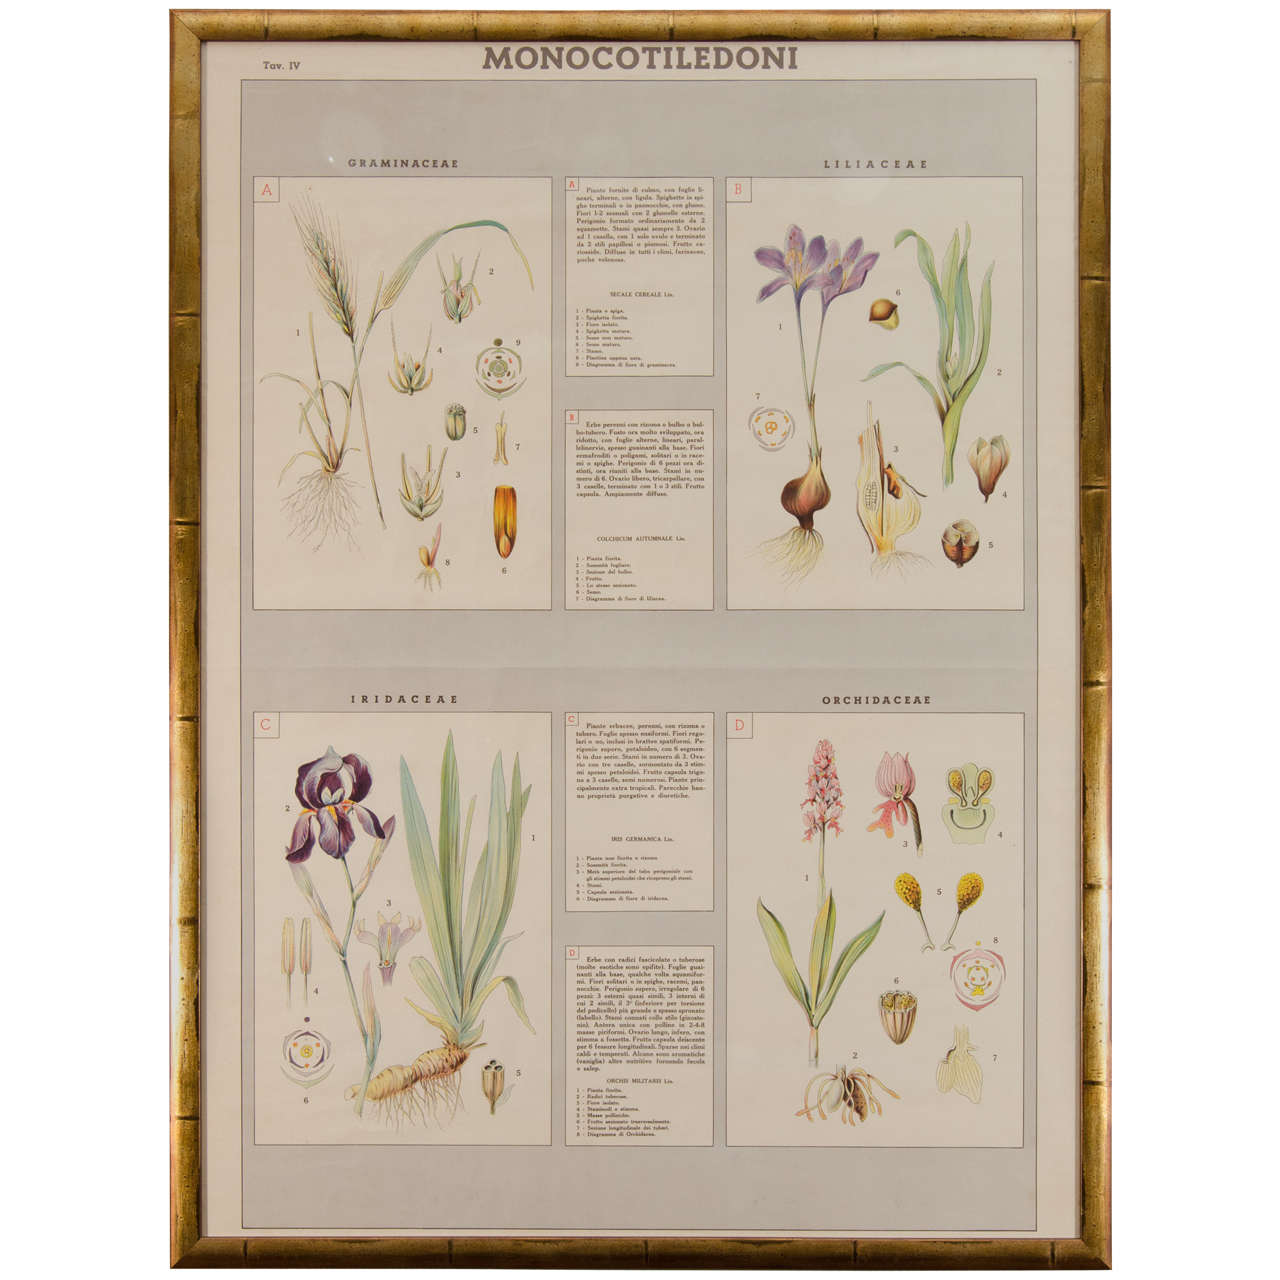 Early 20th Century Italian Botanical Print